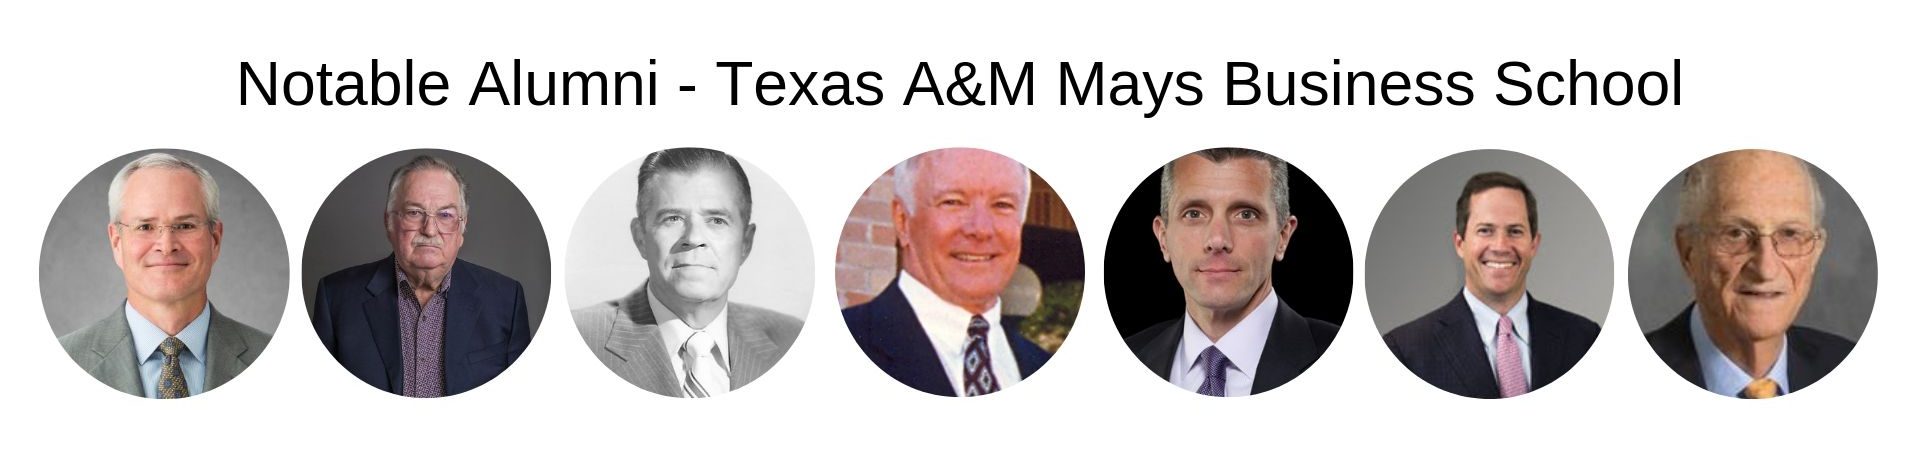 Mays Business School - Mays MBA Program Notable Alumni